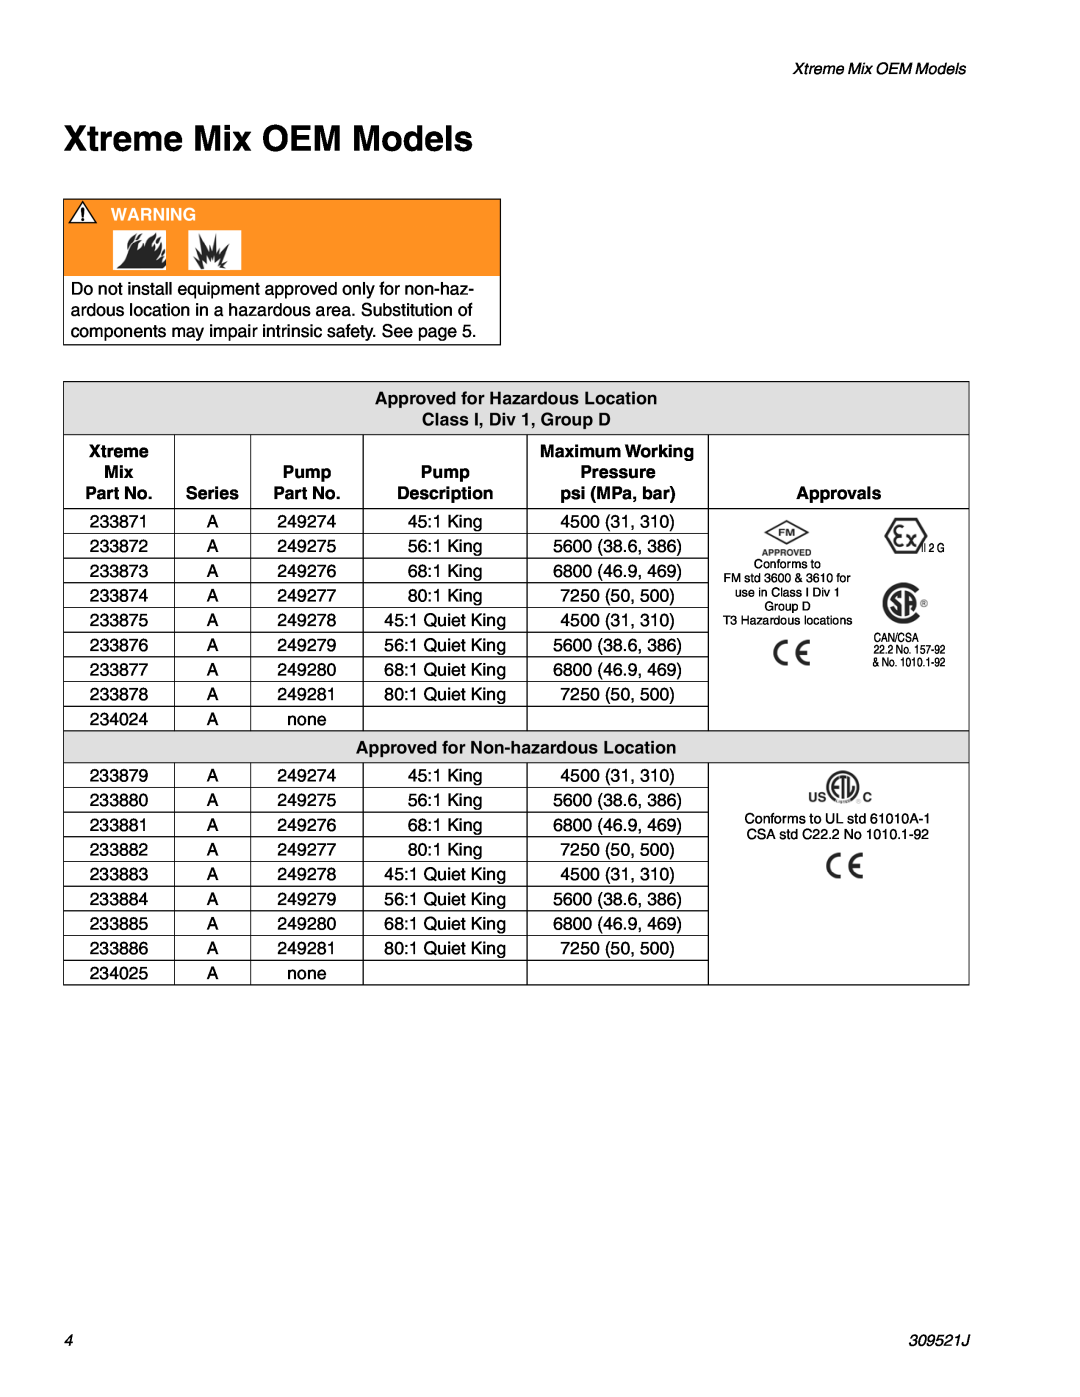 Hitachi 309521J Xtreme Mix OEM Models, Approved for Hazardous Location, Class I, Div 1, Group D, Maximum Working, Pump 